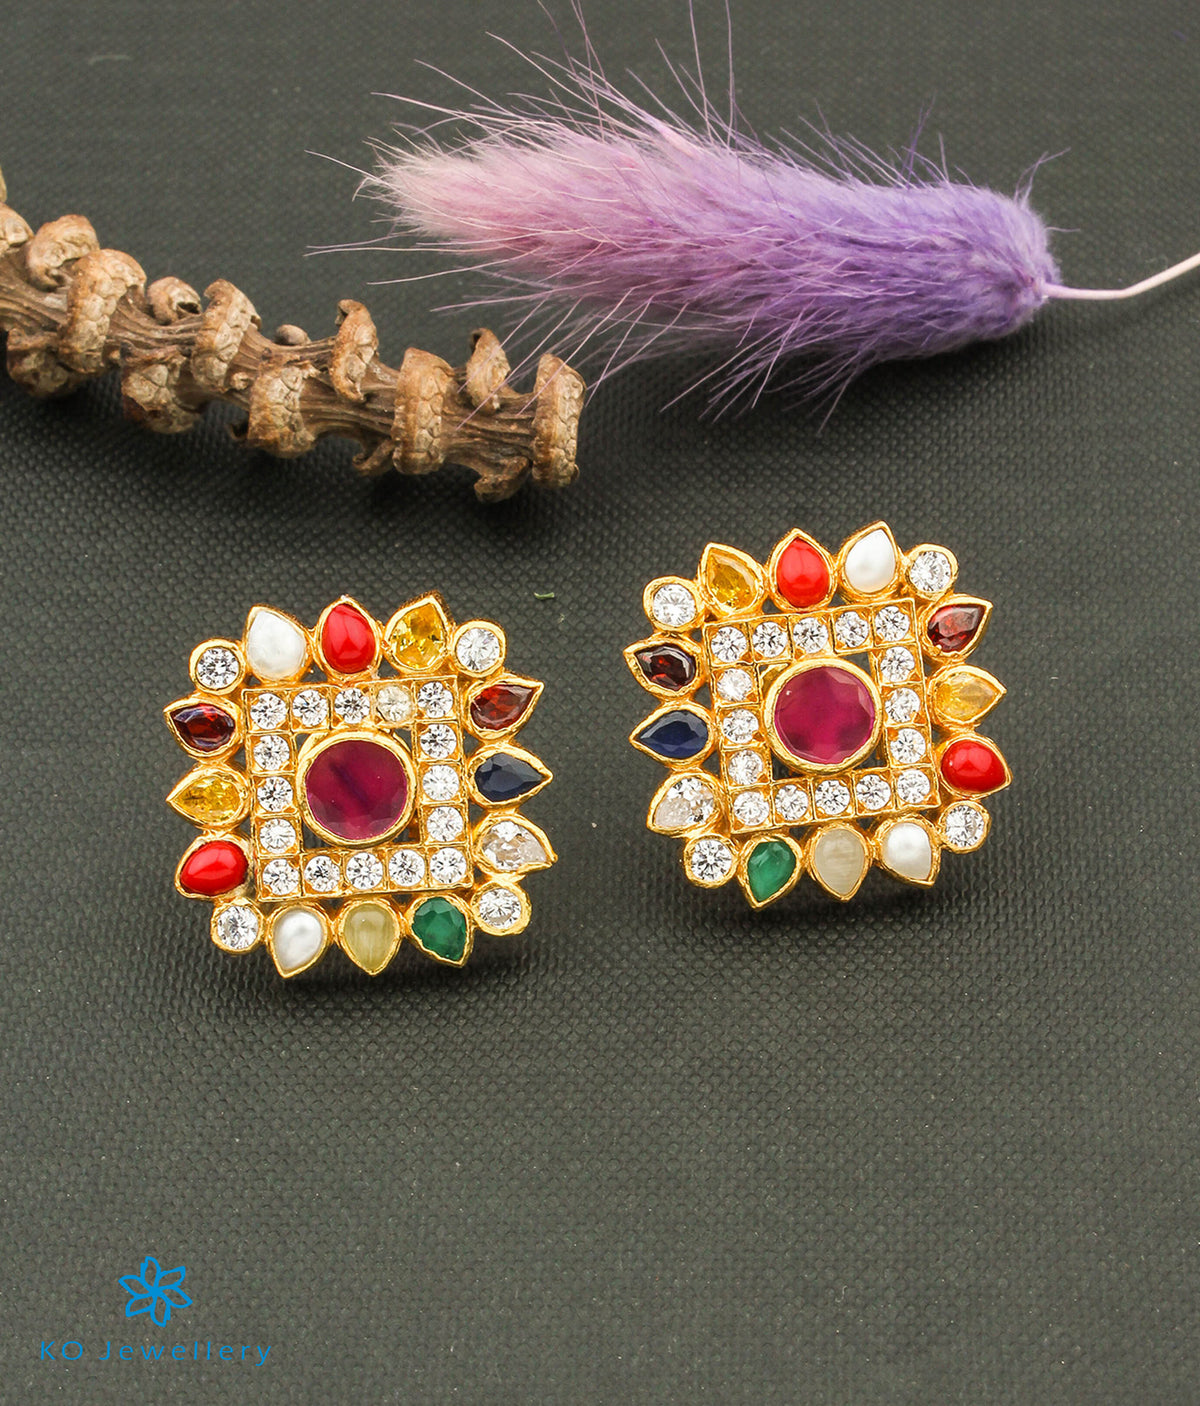 Best Peenzone Gold Plated Navratna Navratna Stud Earrings for Women   PeenZone Jewellers  All Jewellers Design Product In Jaipur